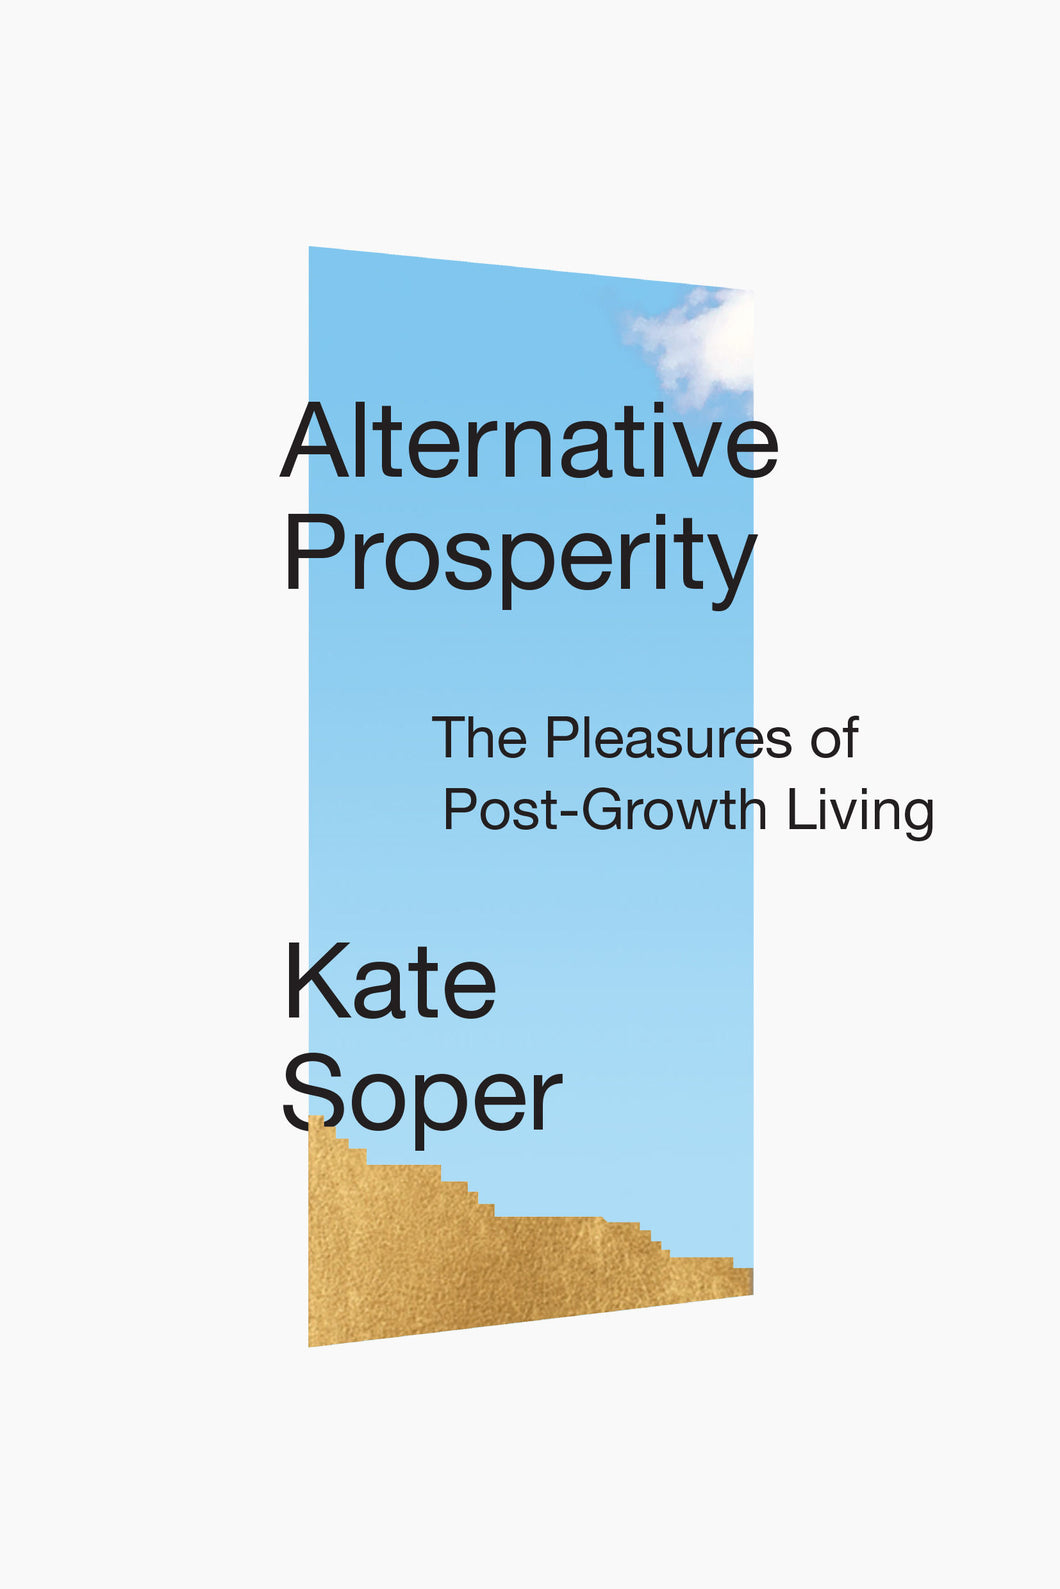 Post-Growth Living: For an Alternative Hedonism ร้านหนังสือและสิ่งของ เป็นร้านหนังสือภาษาอังกฤษหายาก และร้านกาแฟ หรือ บุ๊คคาเฟ่ ตั้งอยู่สุขุมวิท กรุงเทพ